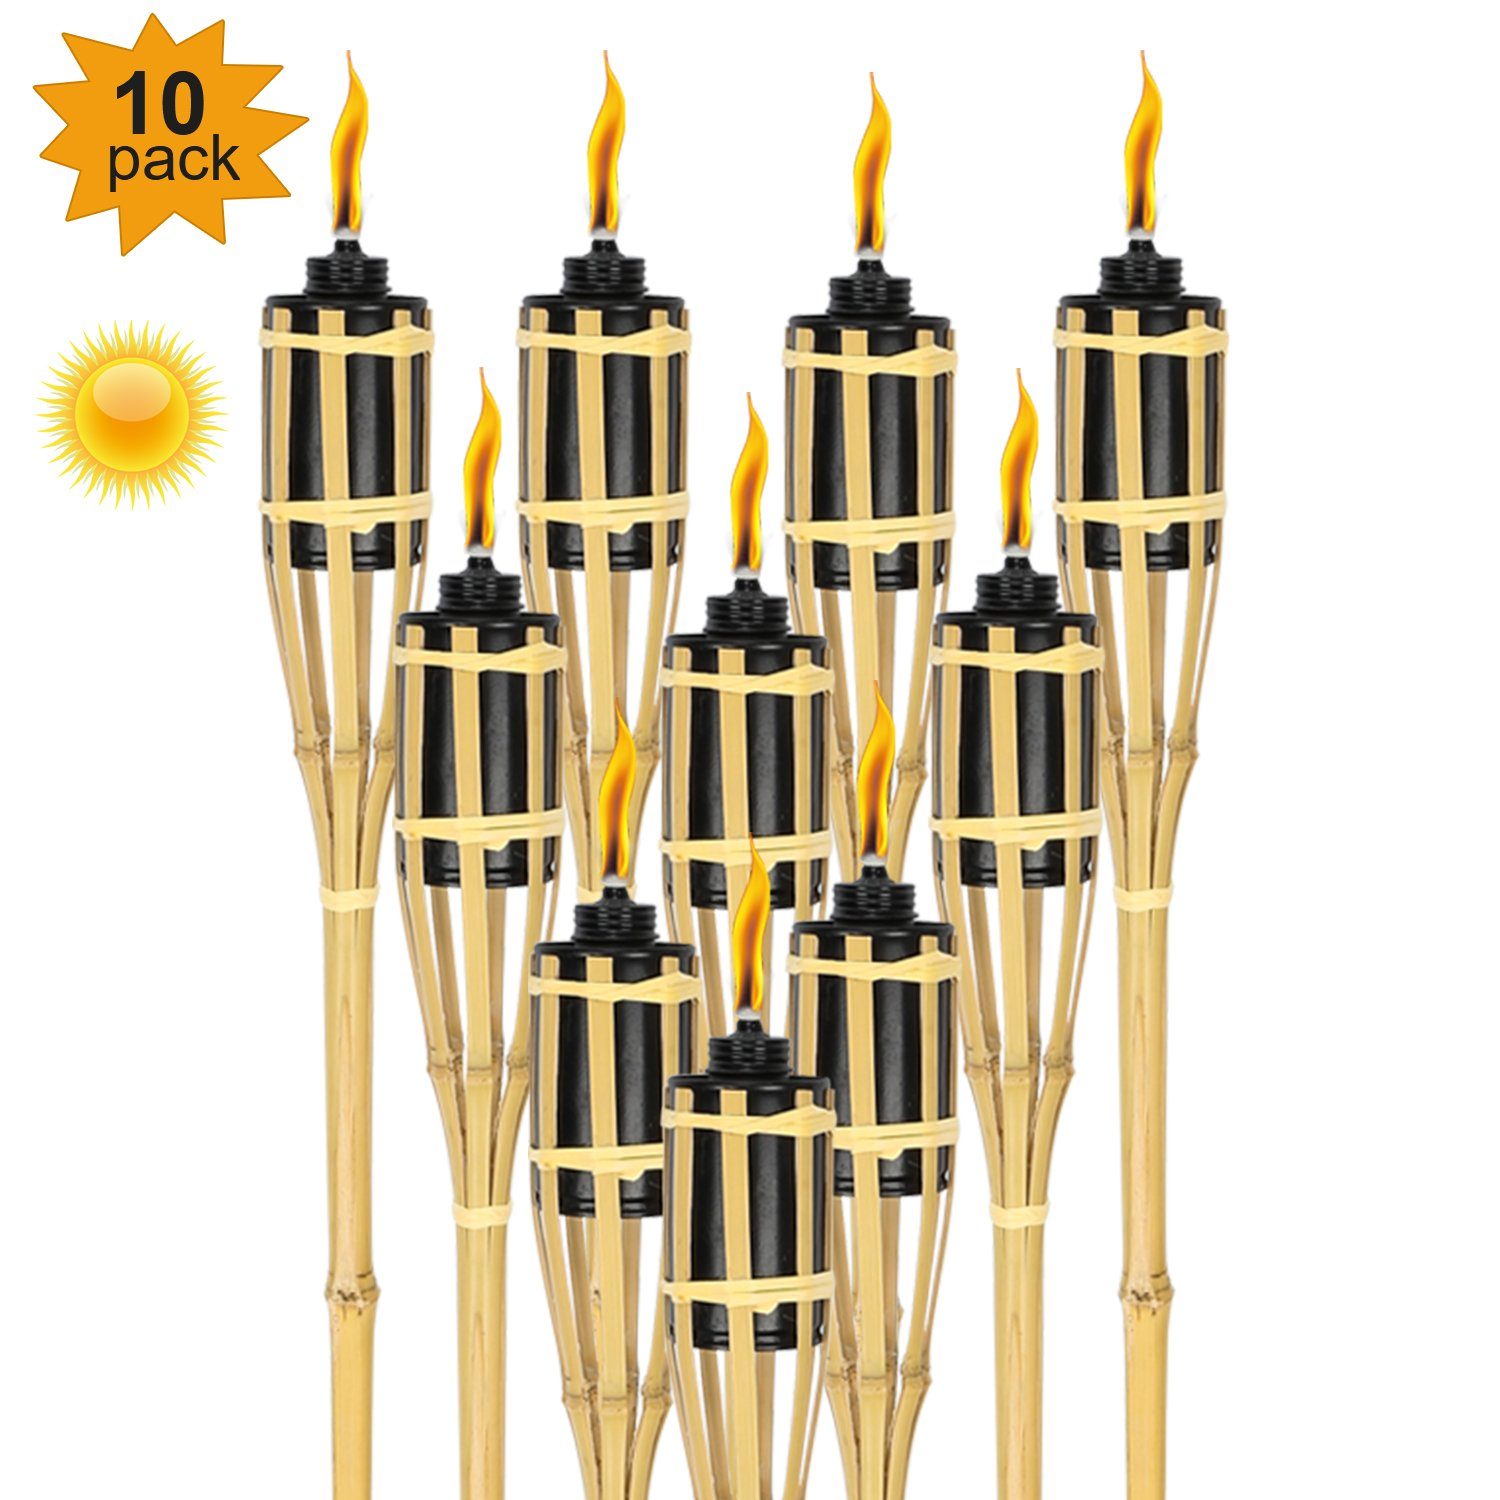 10x 90cm Lampen Set Gartenfackeln Gartenfackel Fackeloel Natur Gimisgu fackeln, für Bambus Docht